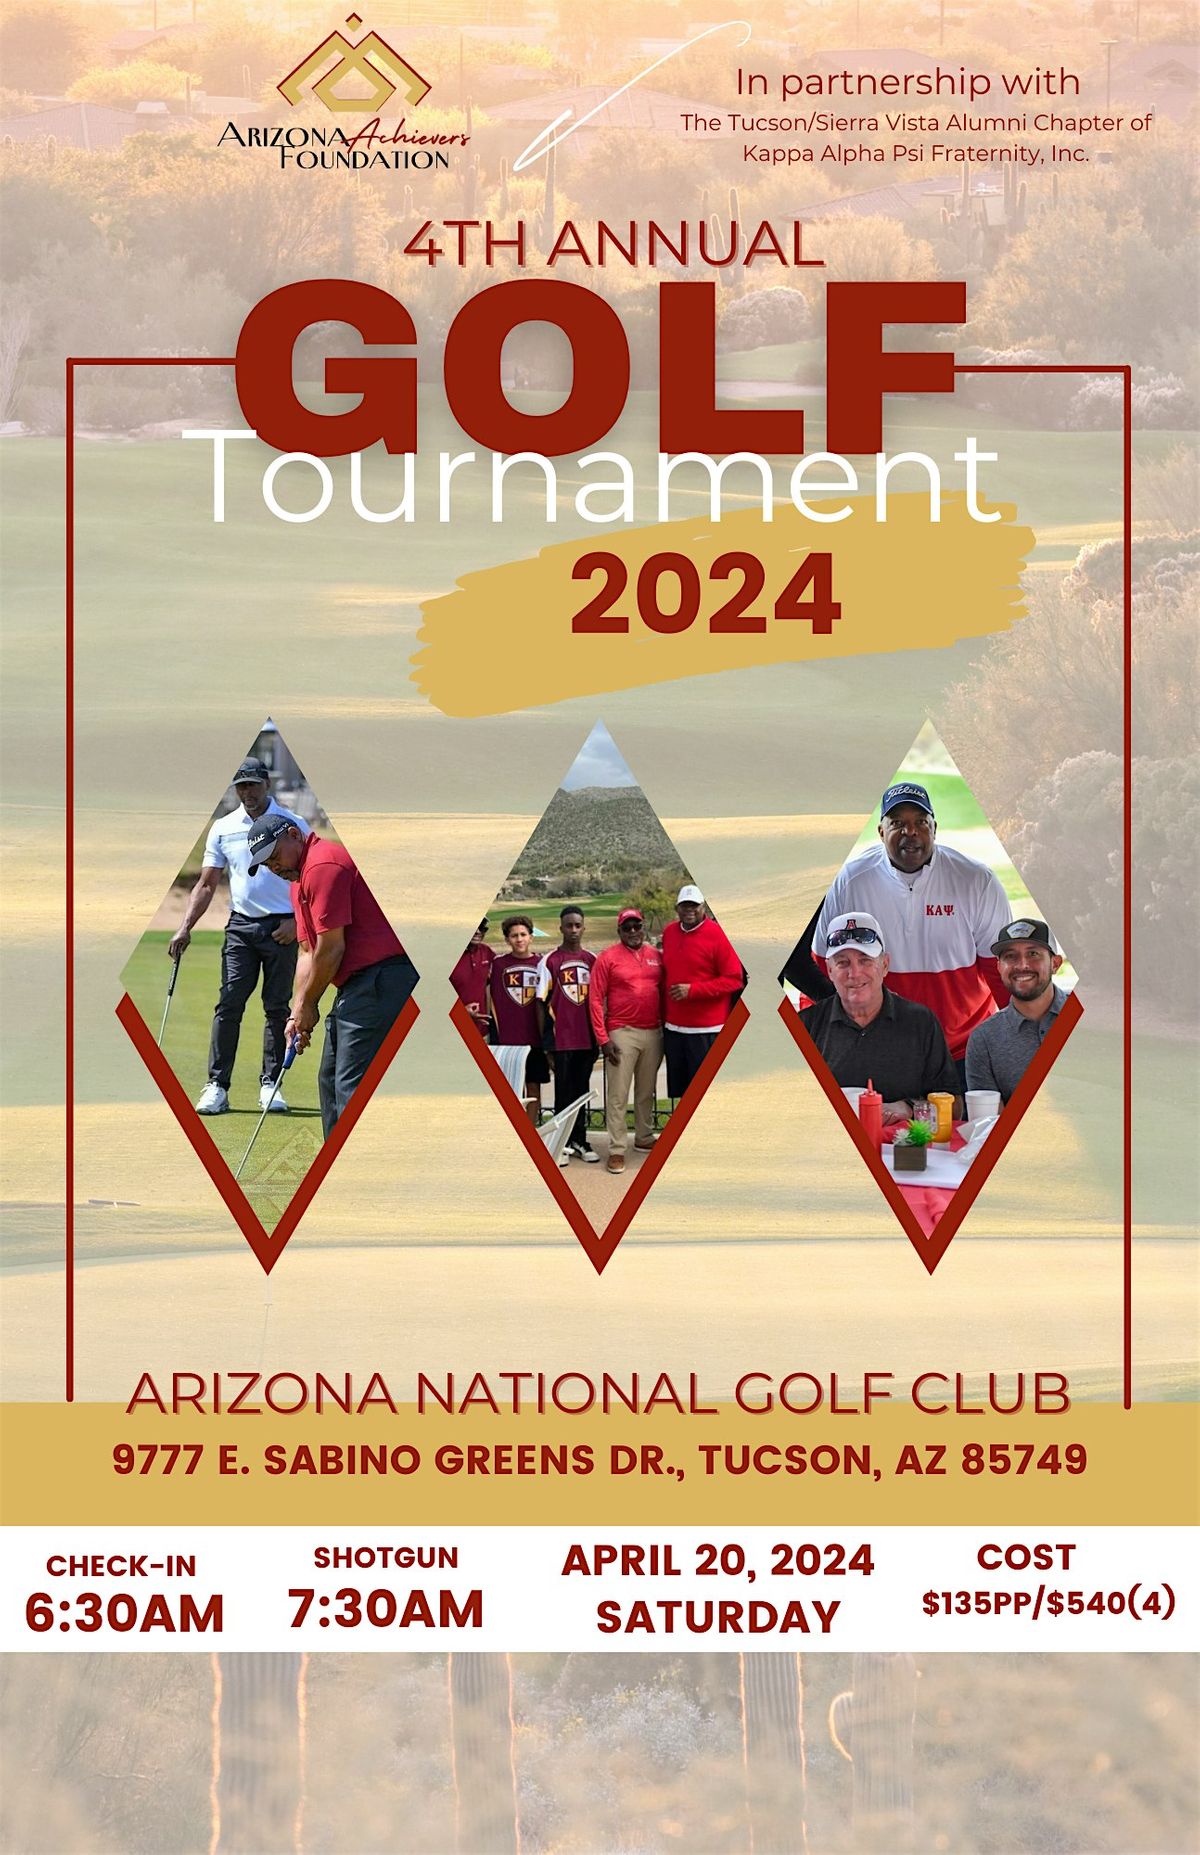 Arizona Achievers Foundation 4th Annual Golf Tournament